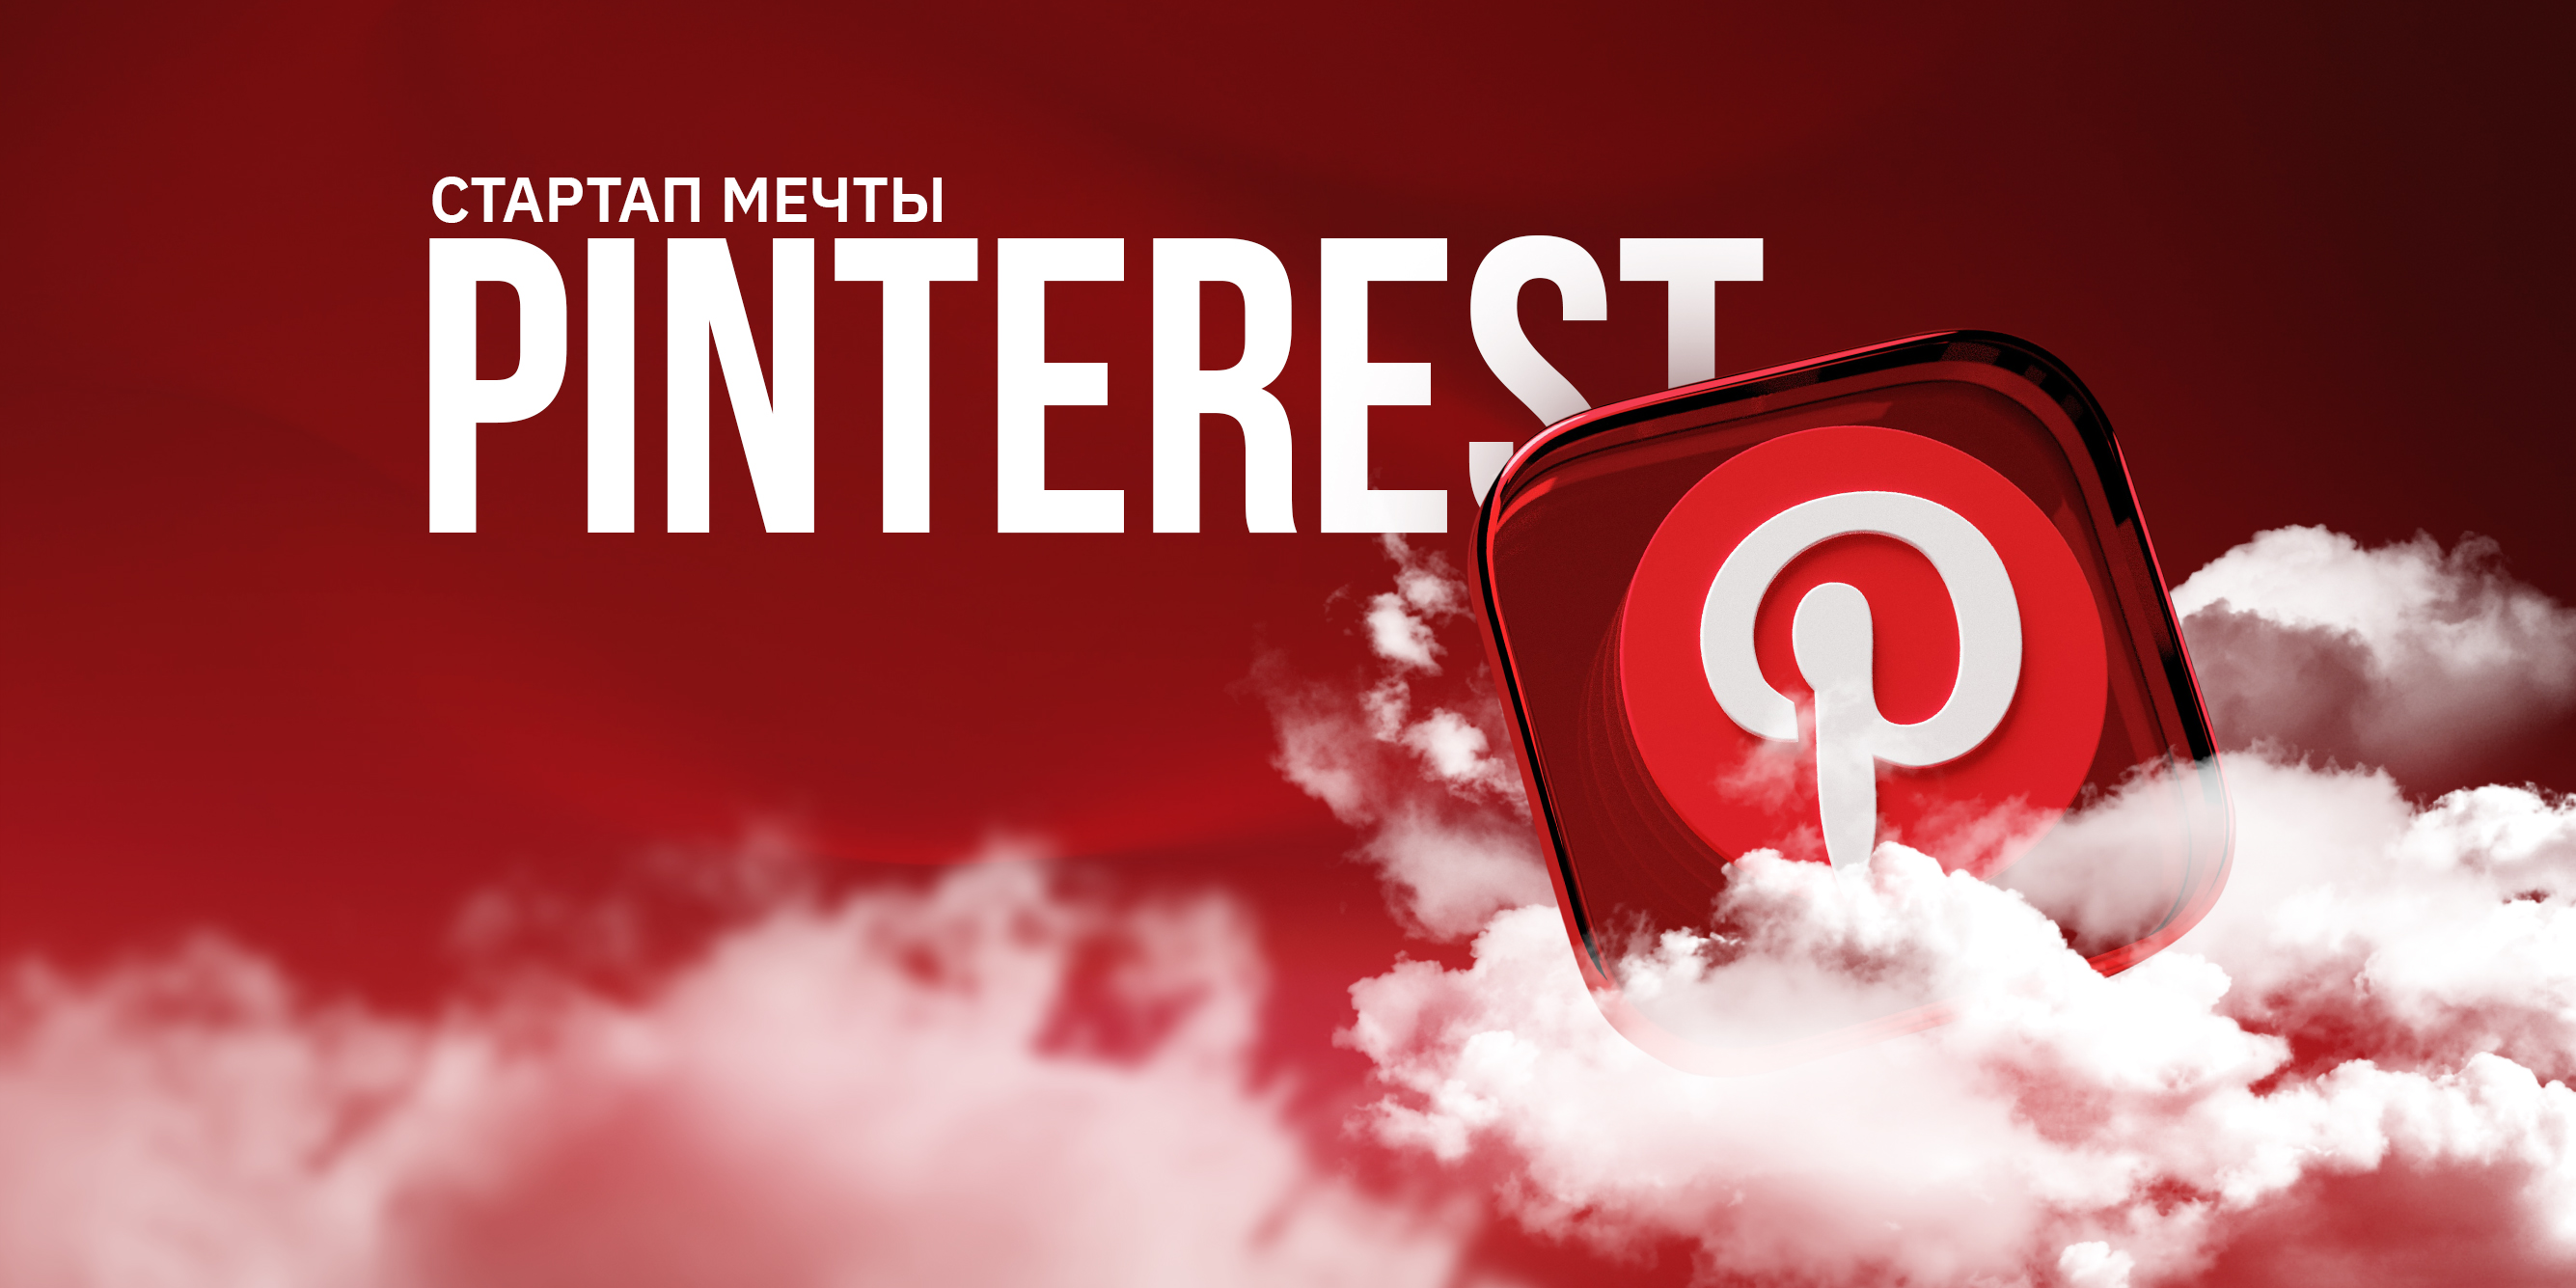 Pinterest - стартап мечты